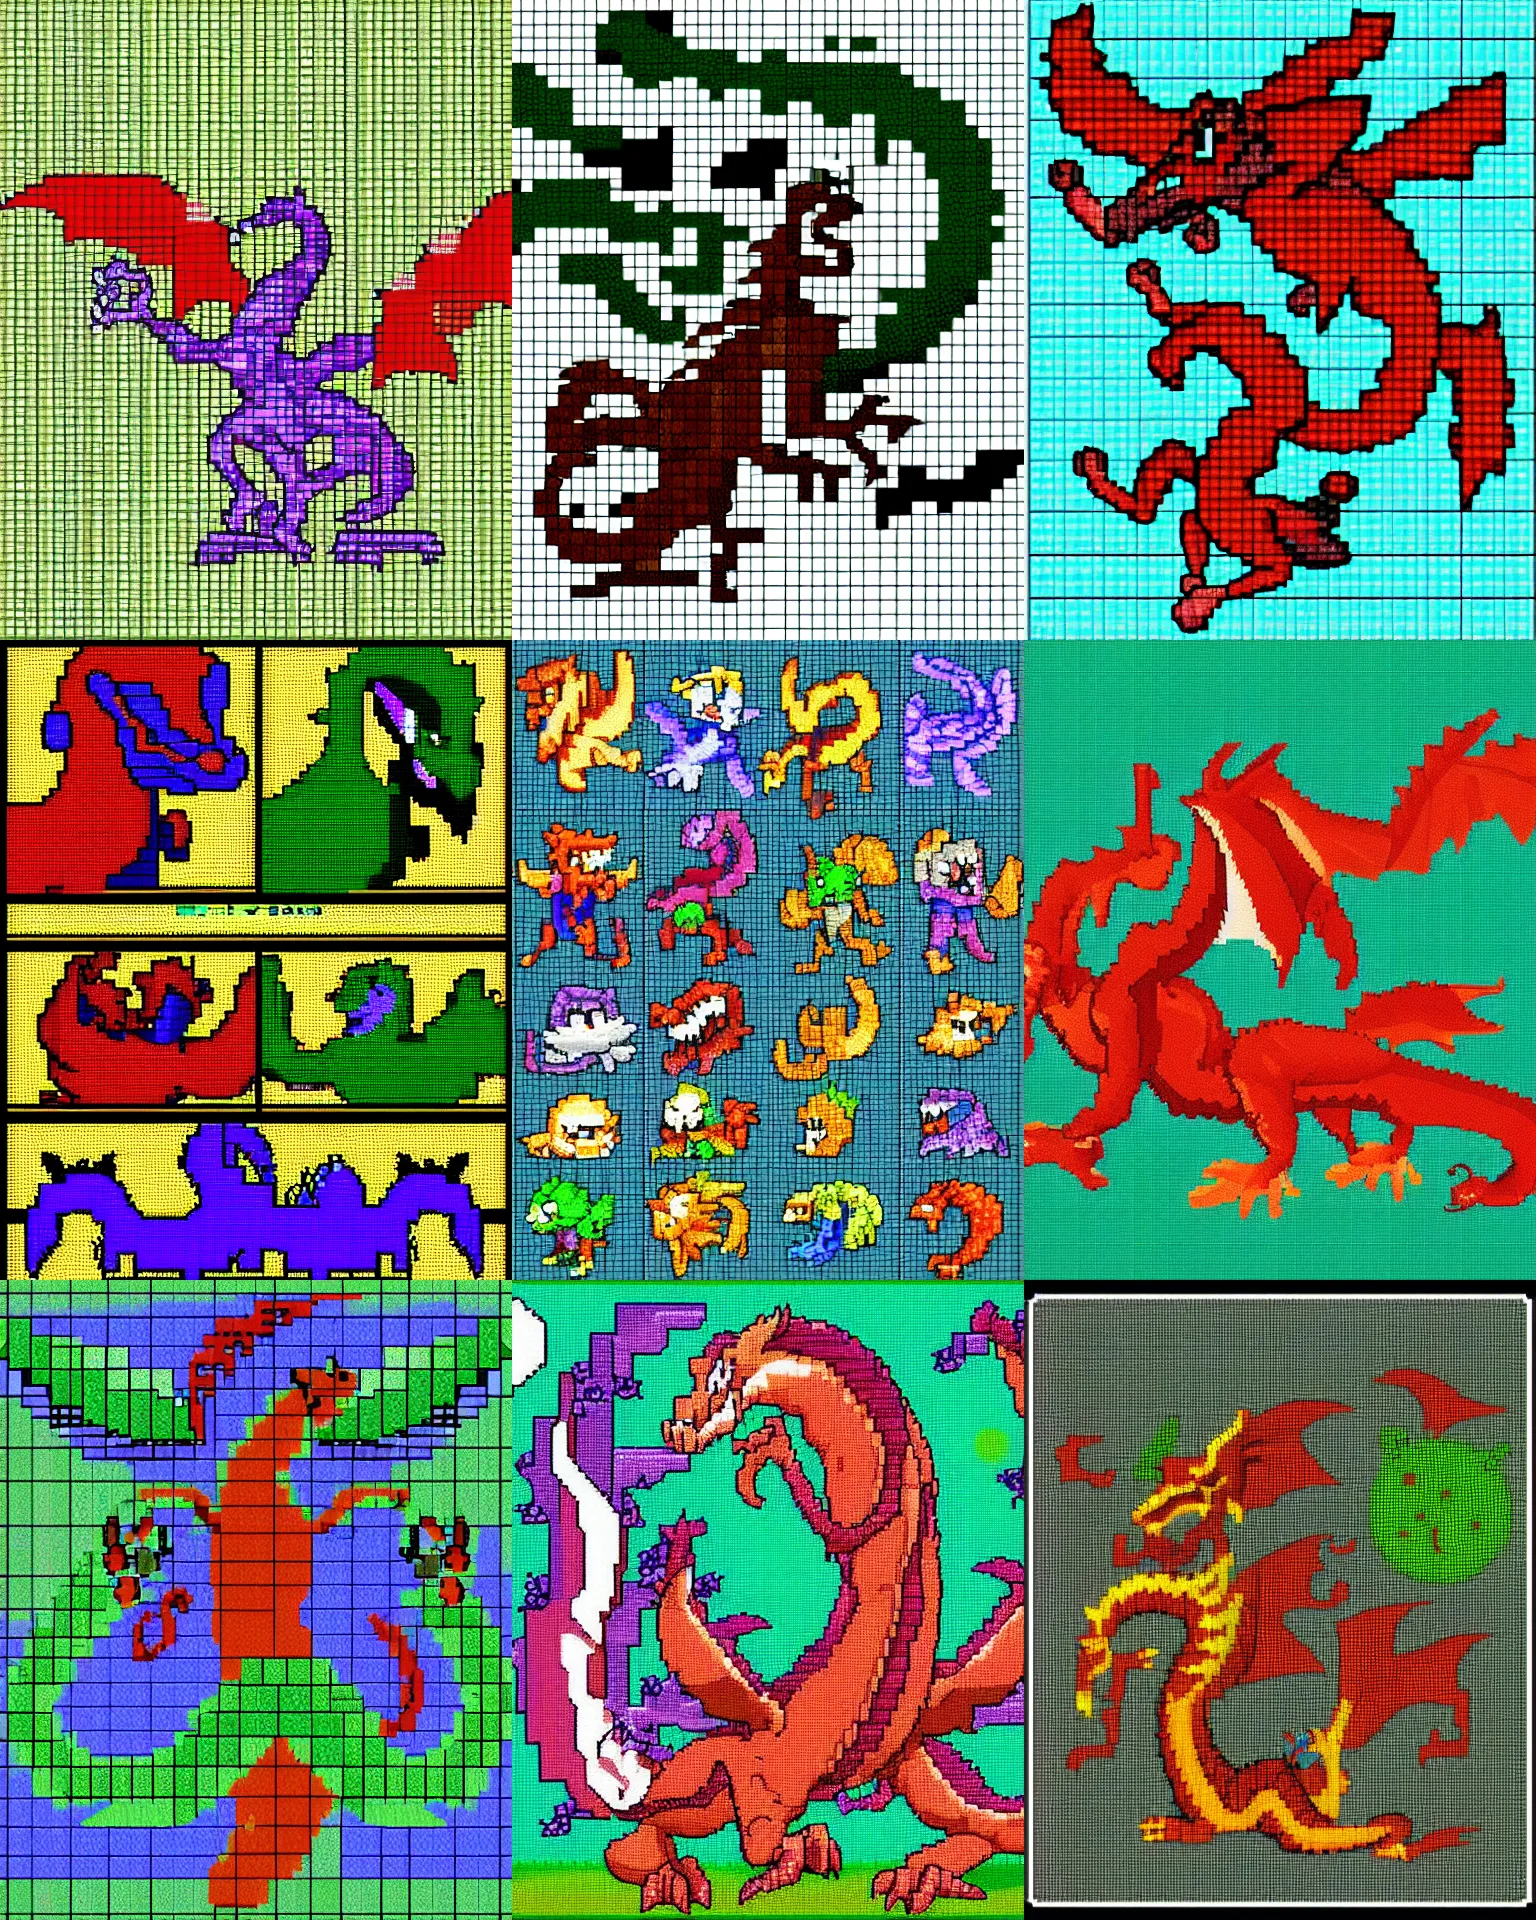 Prompt: pixel art sprites of a dragon